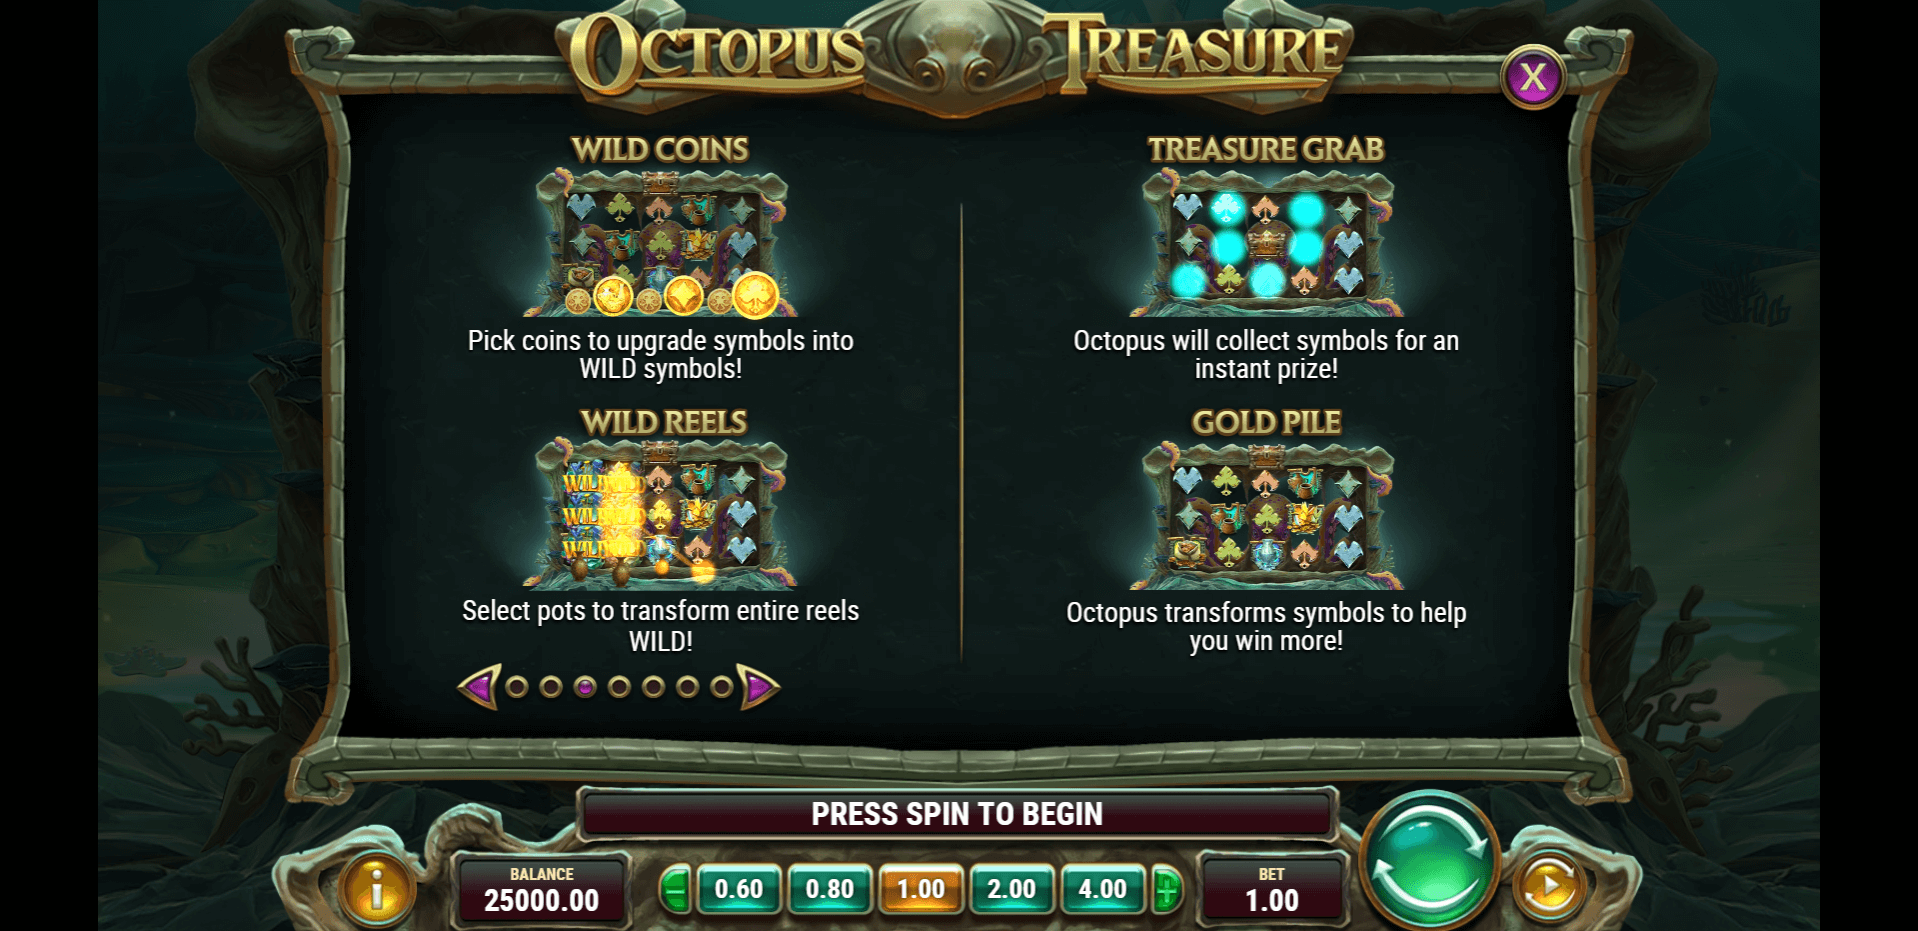 octopus treasure slot machine detail image 2